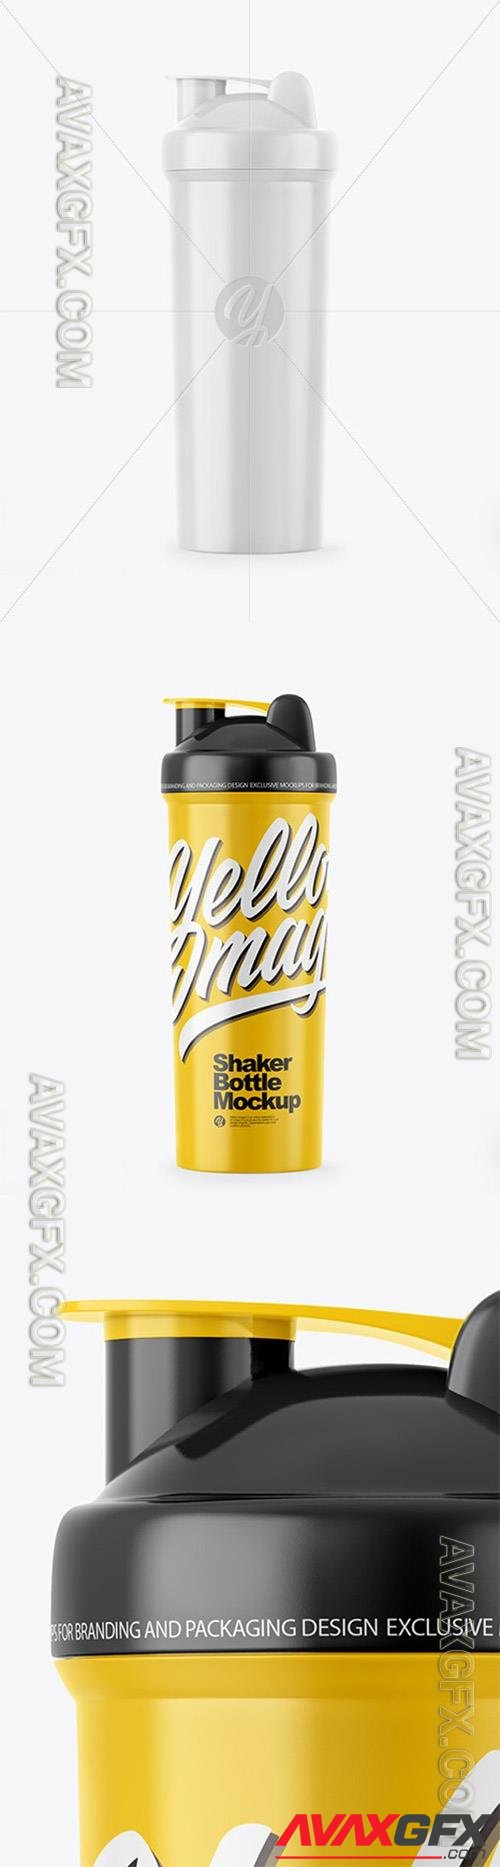 Glossy Shaker Bottle Mockup - Front View 64193 TIF